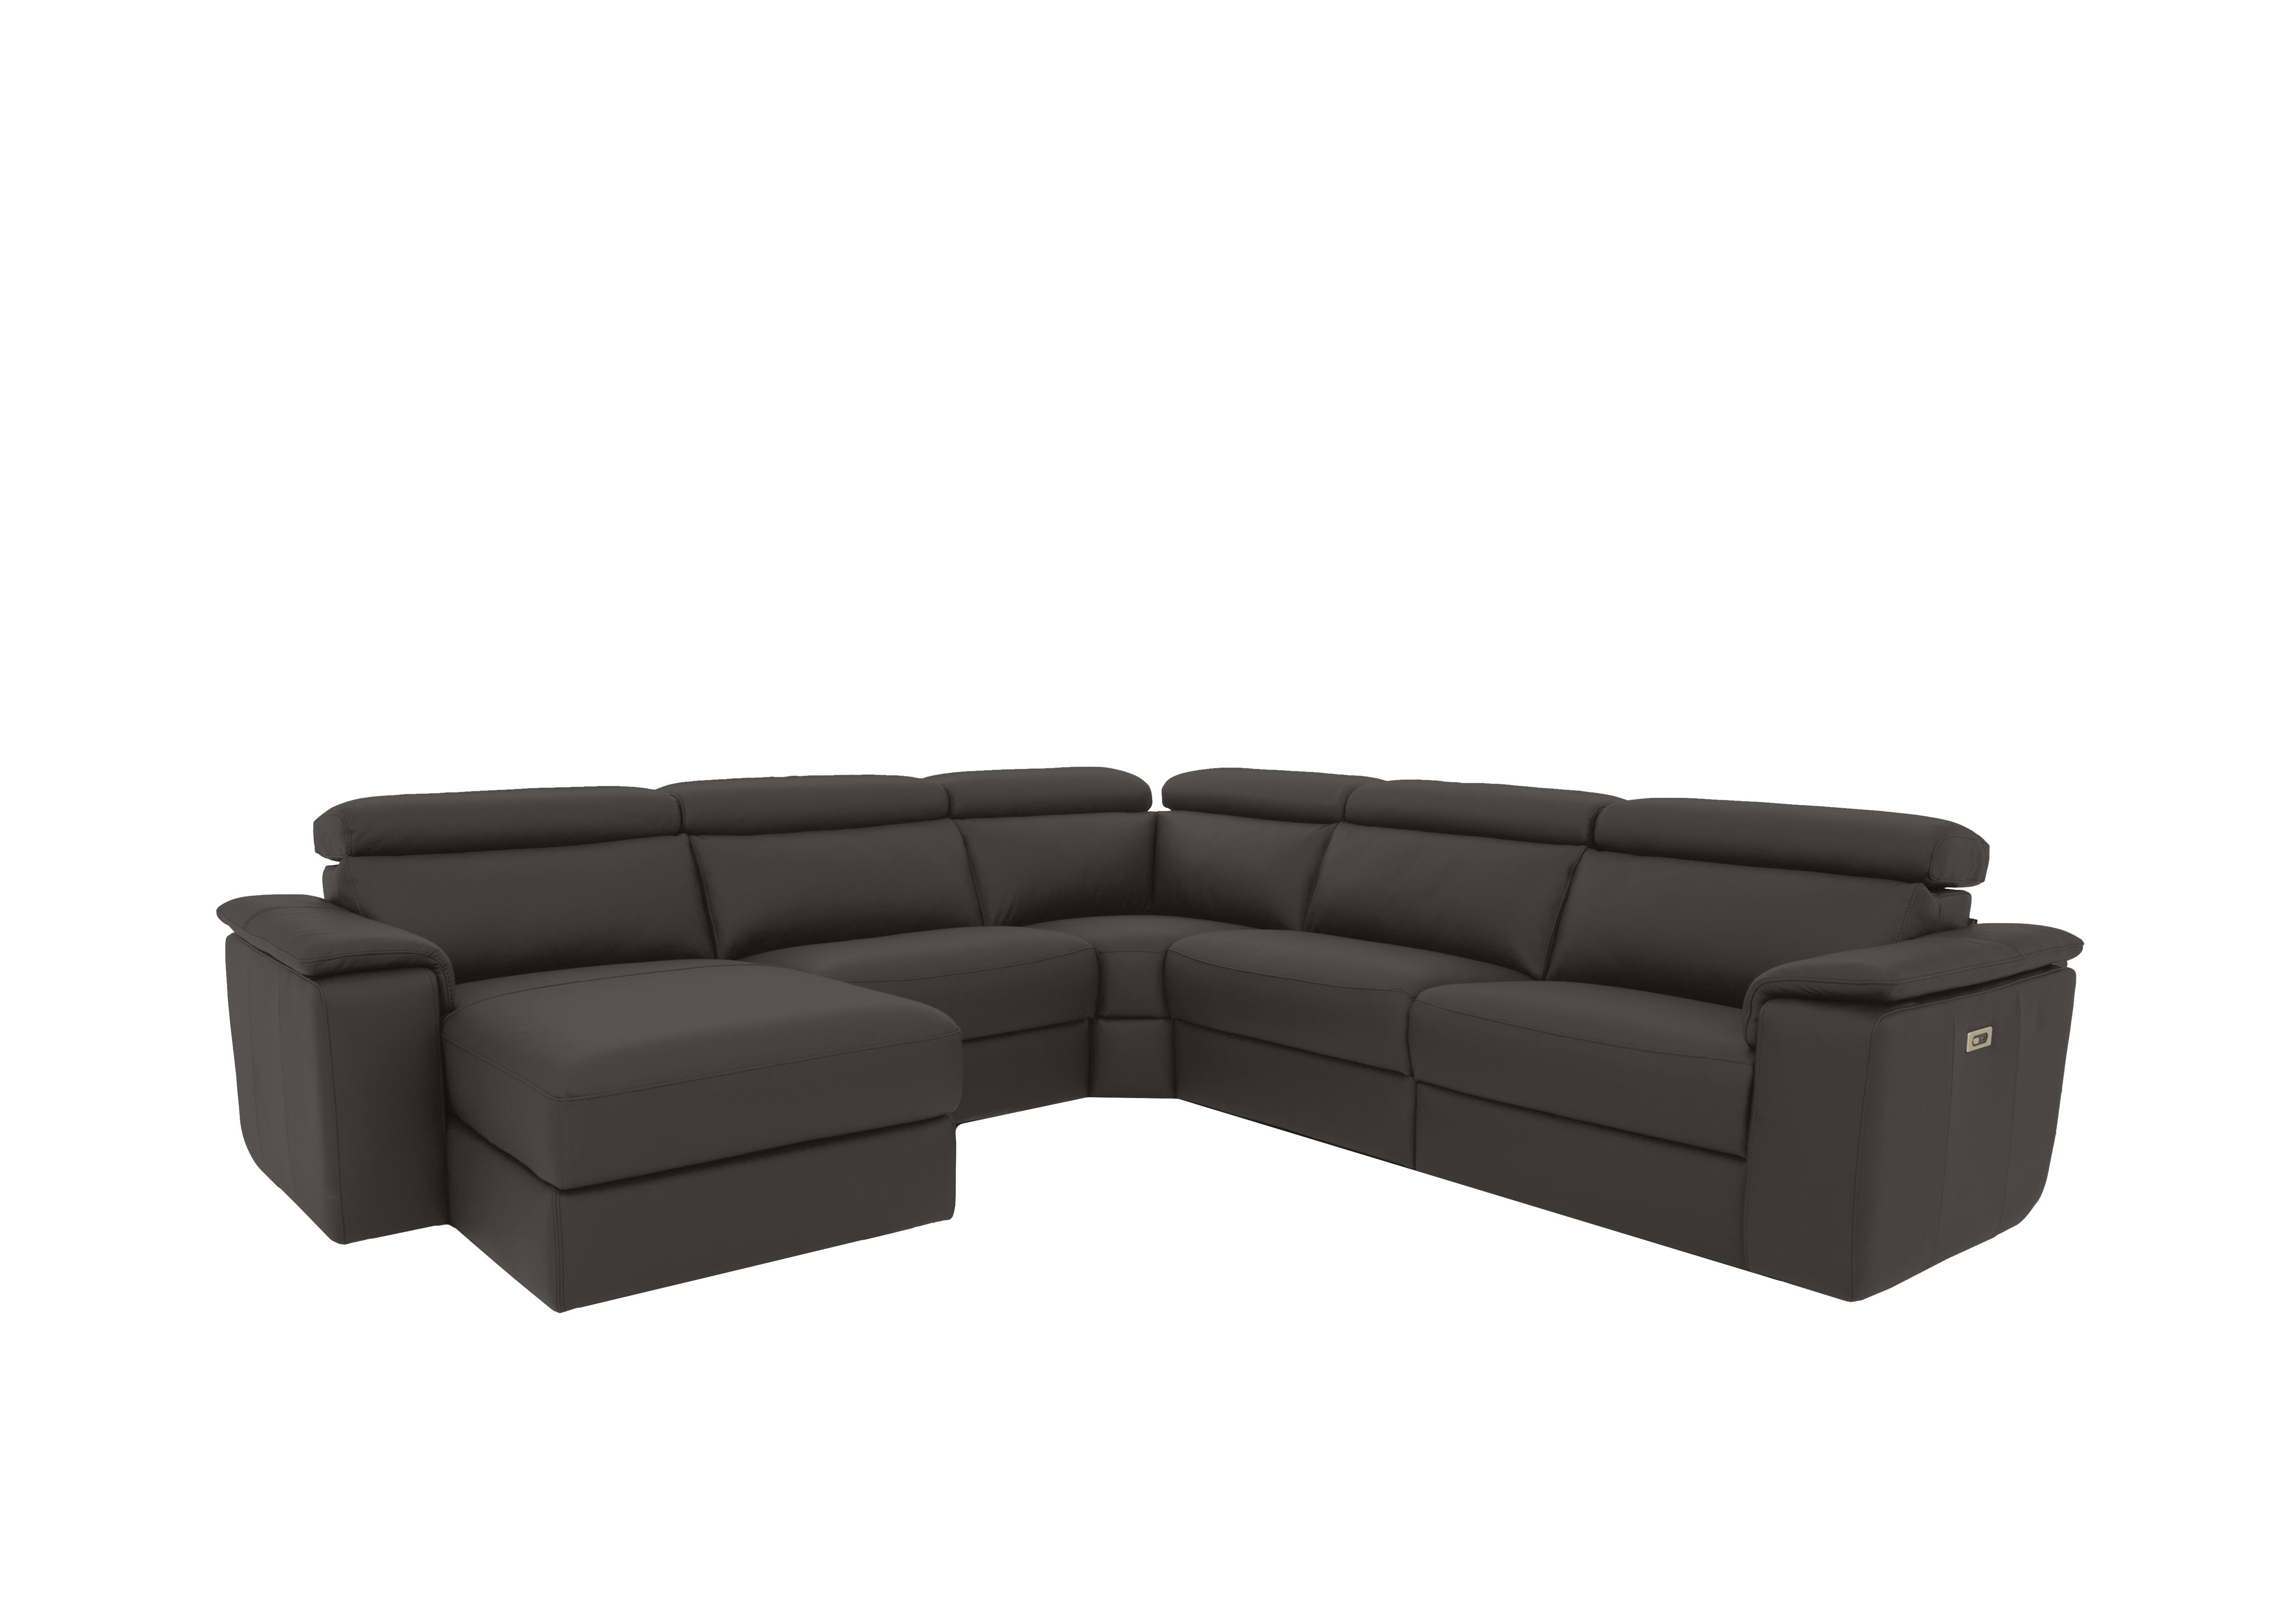 Davide Large Leather Corner Sofa with Chaise End in 327 Torello Grigio Scuro on Furniture Village